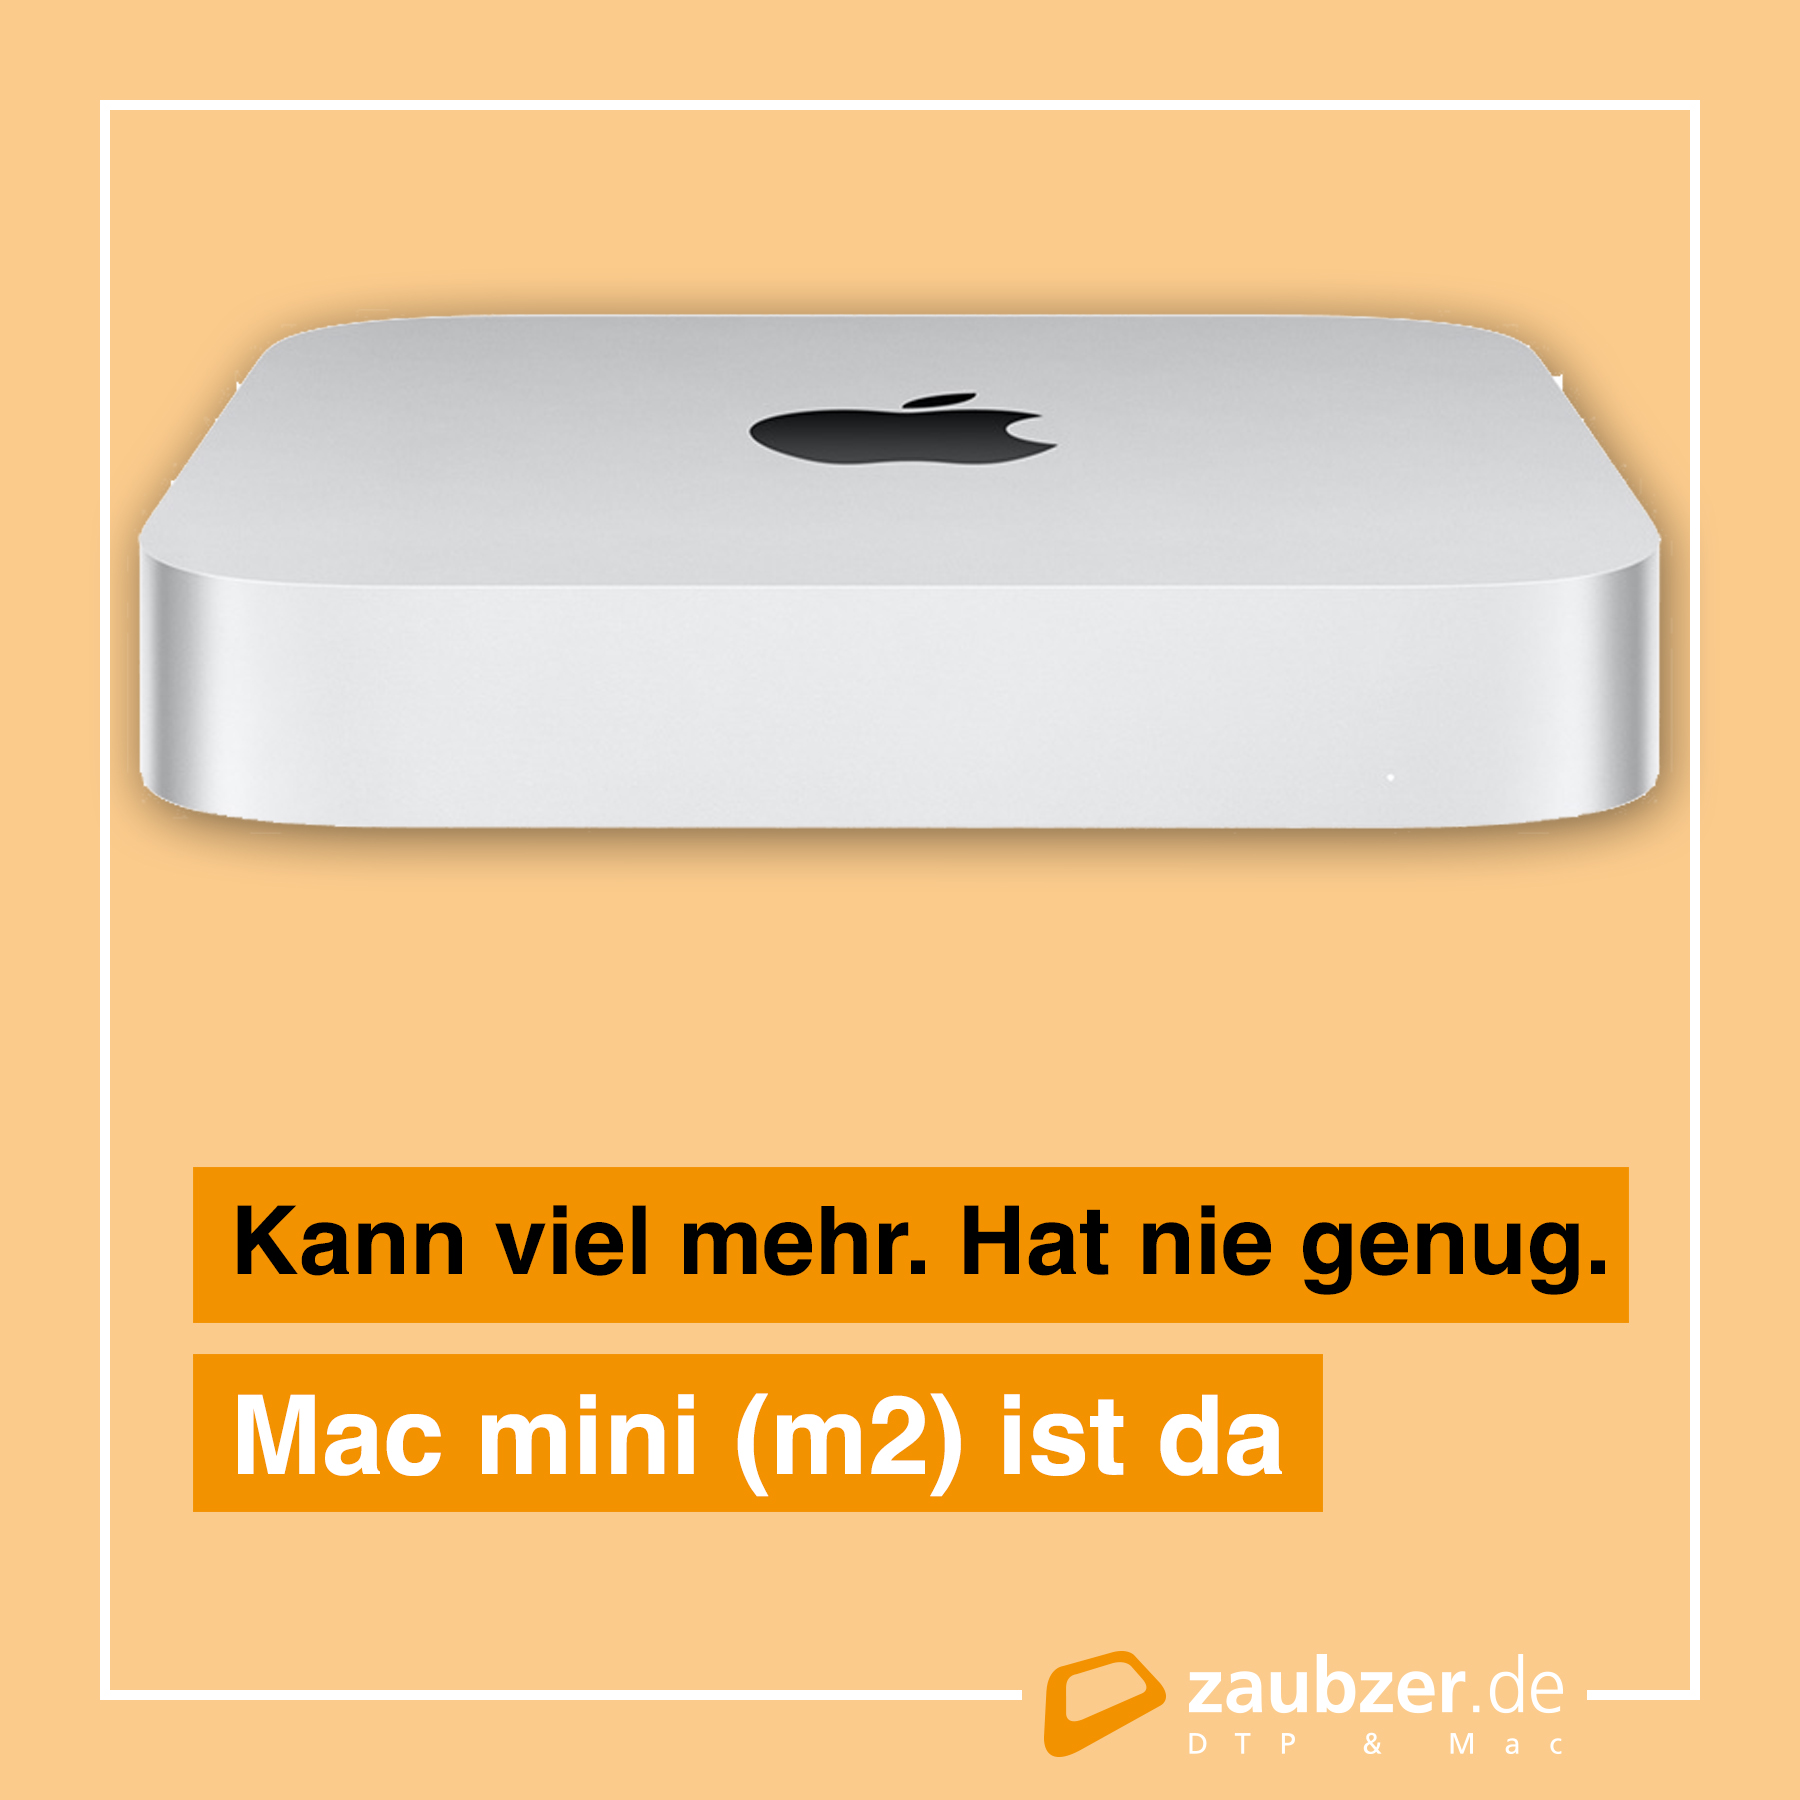 Mac mini (M2) Kann viel mehr. Hat nie genug. zaubzer.de - Mannheim